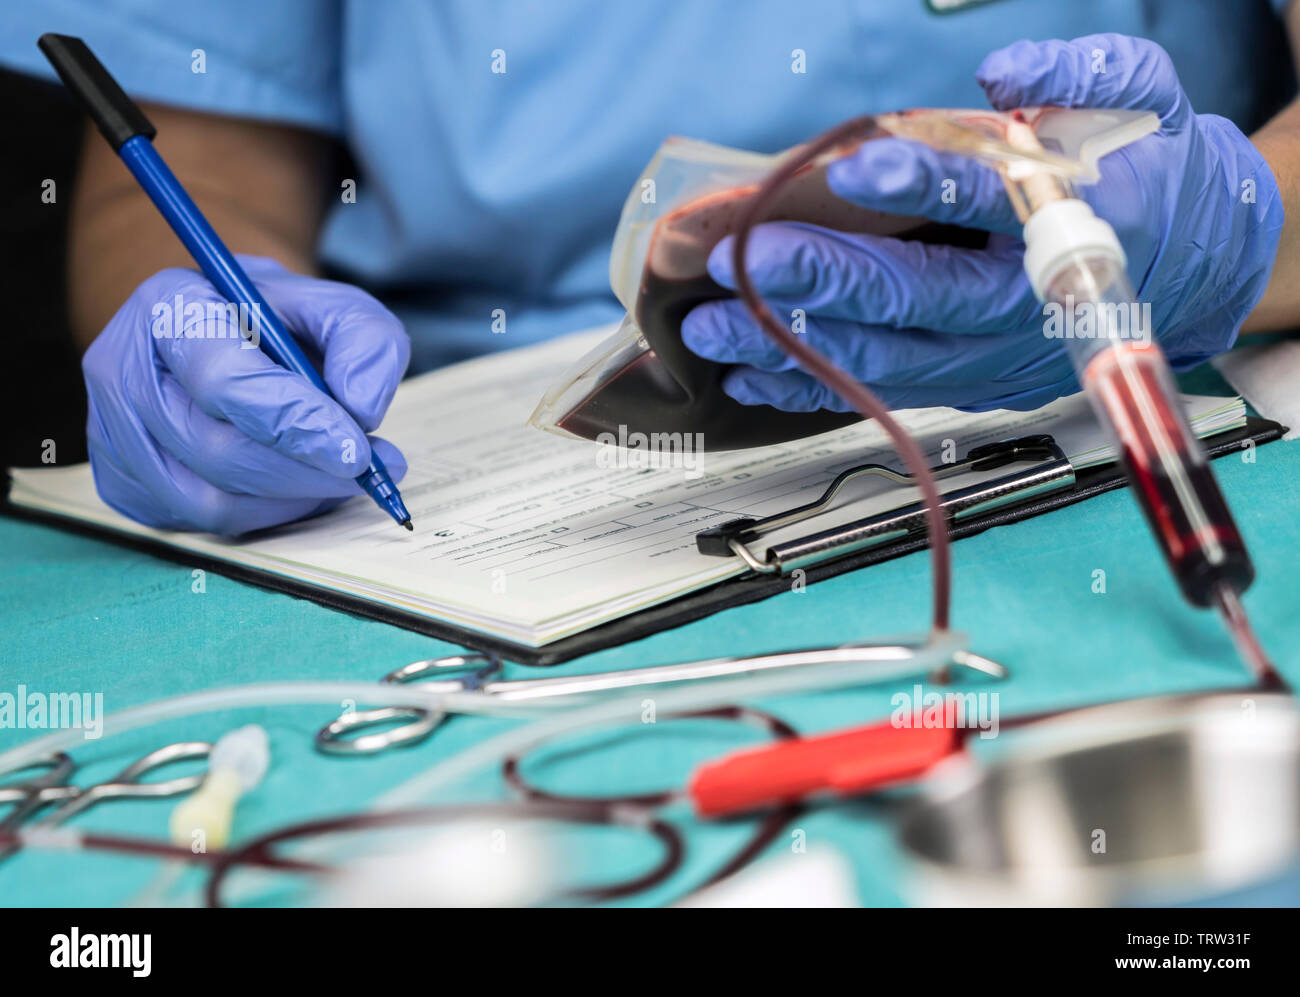 Un infermiere prende i dati da una sacca di sangue in un ospedale, immagine concettuale Foto Stock